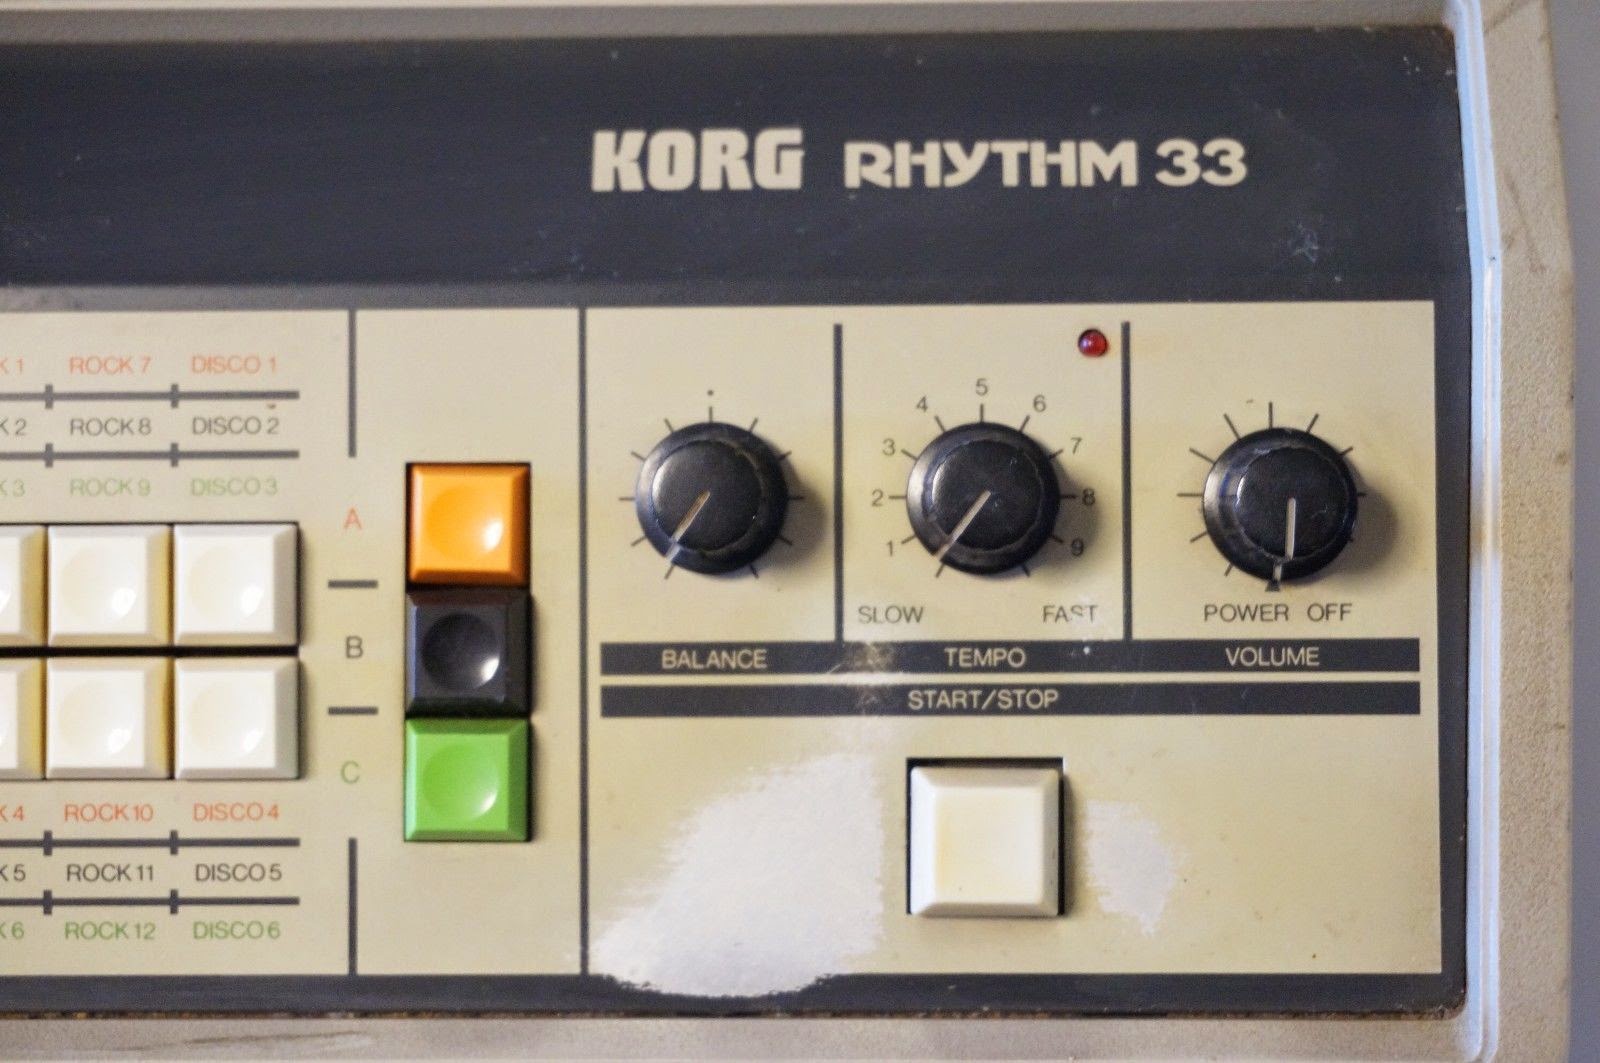 JonDent - Exploring Electronic Music: KORG Rhythm KR-33